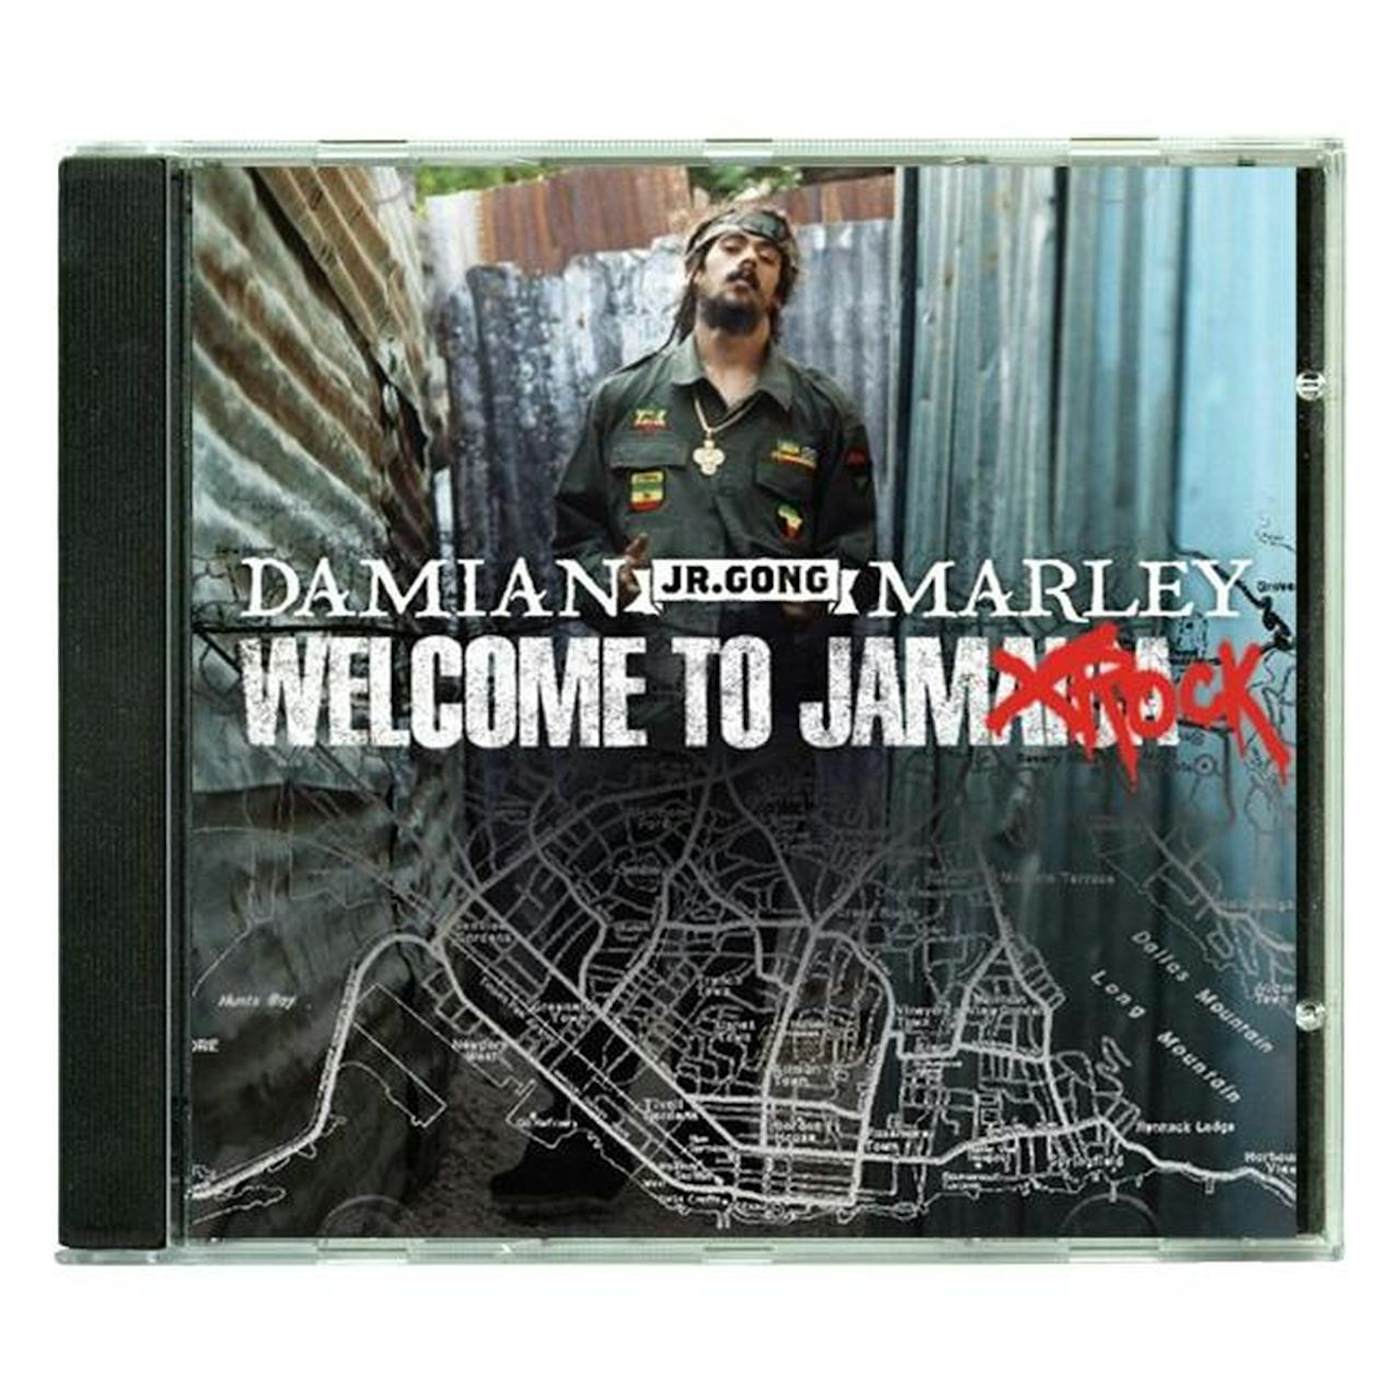 Damian Marley "Welcome to Jamrock" CD